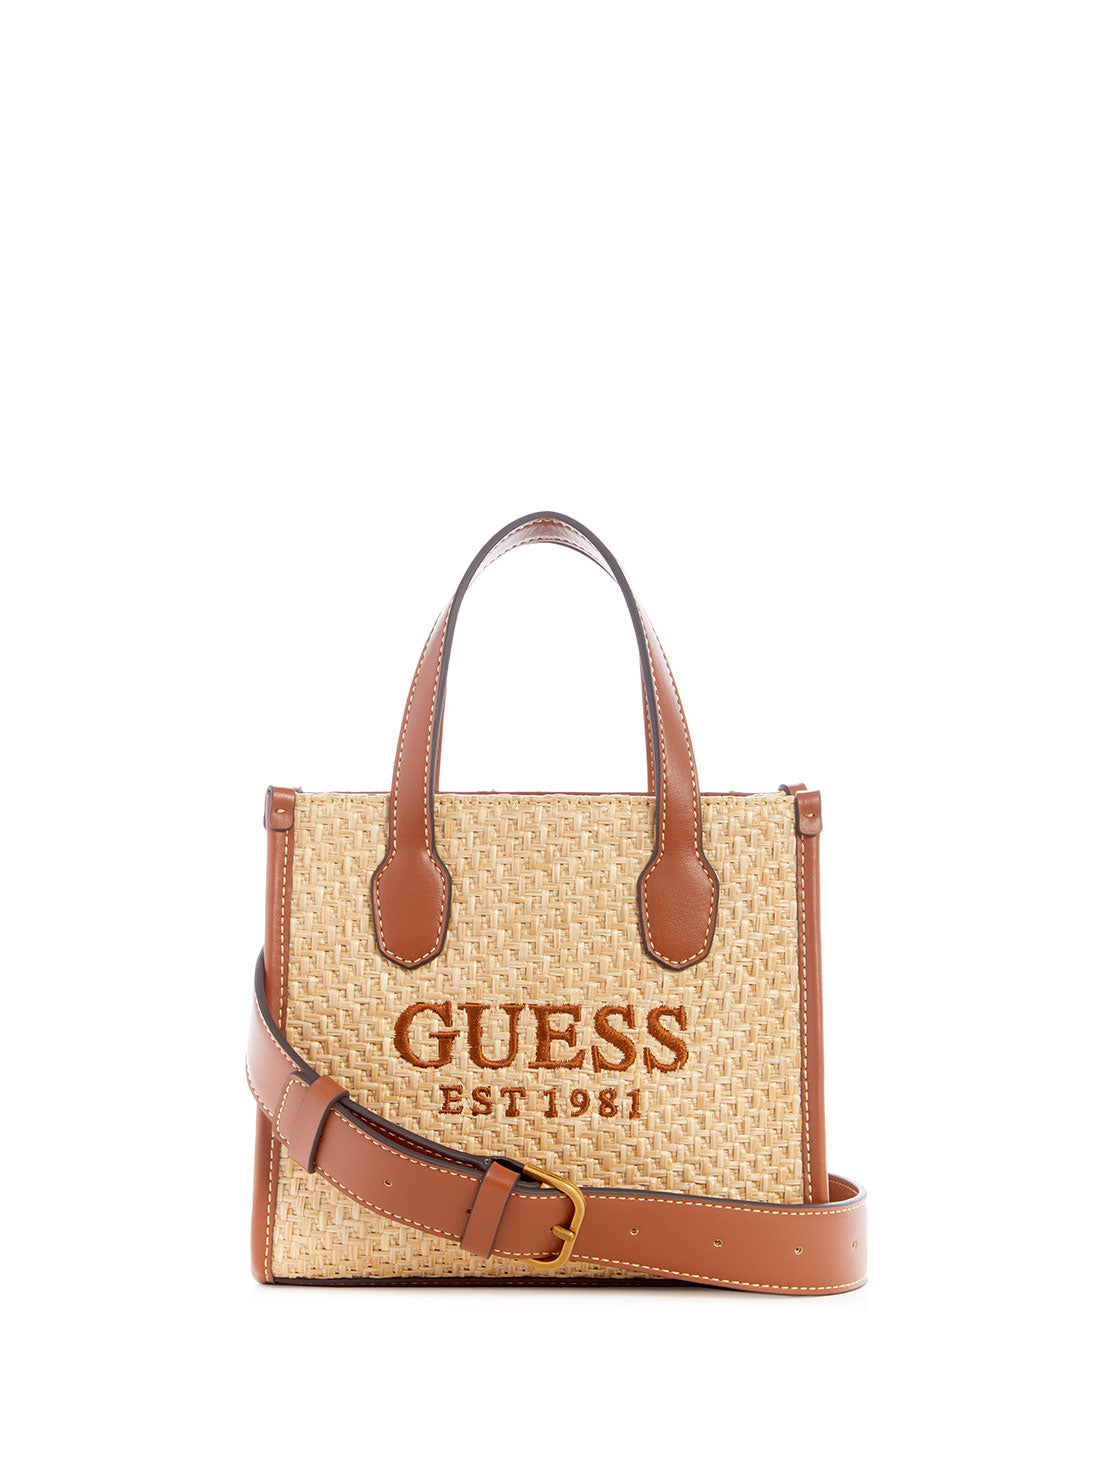 GUESS Women's Cognac Silvana Mini Tote Bag WS866577 Front View